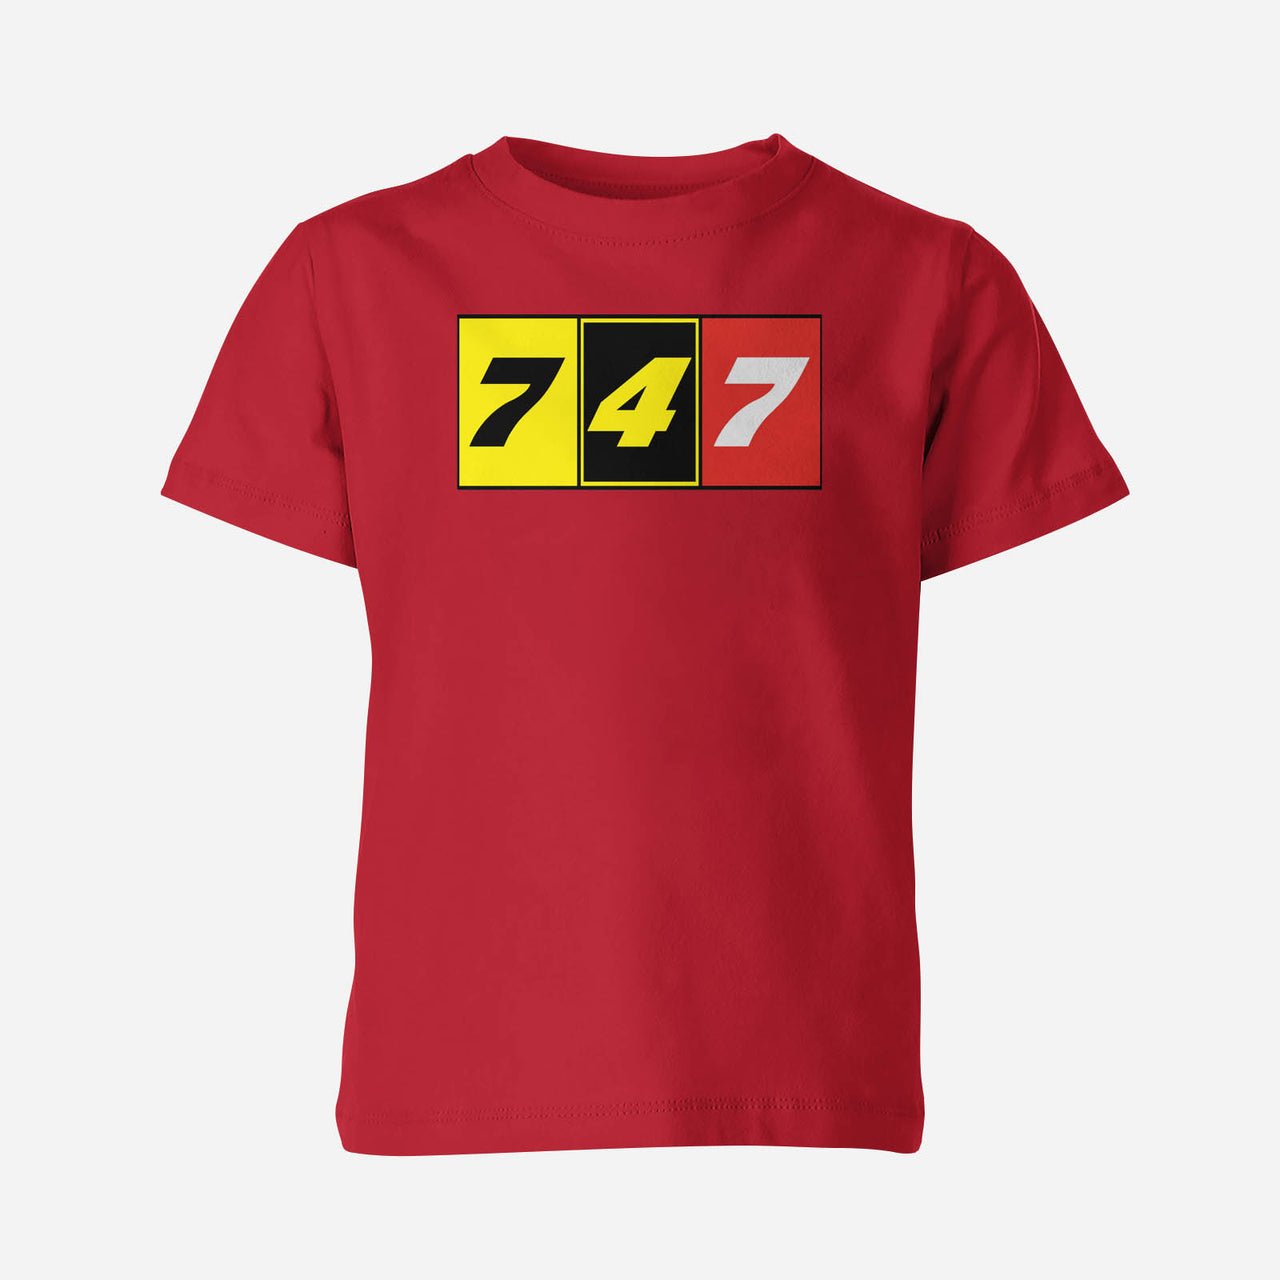 Flat Colourful 747 Designed Children T-Shirts